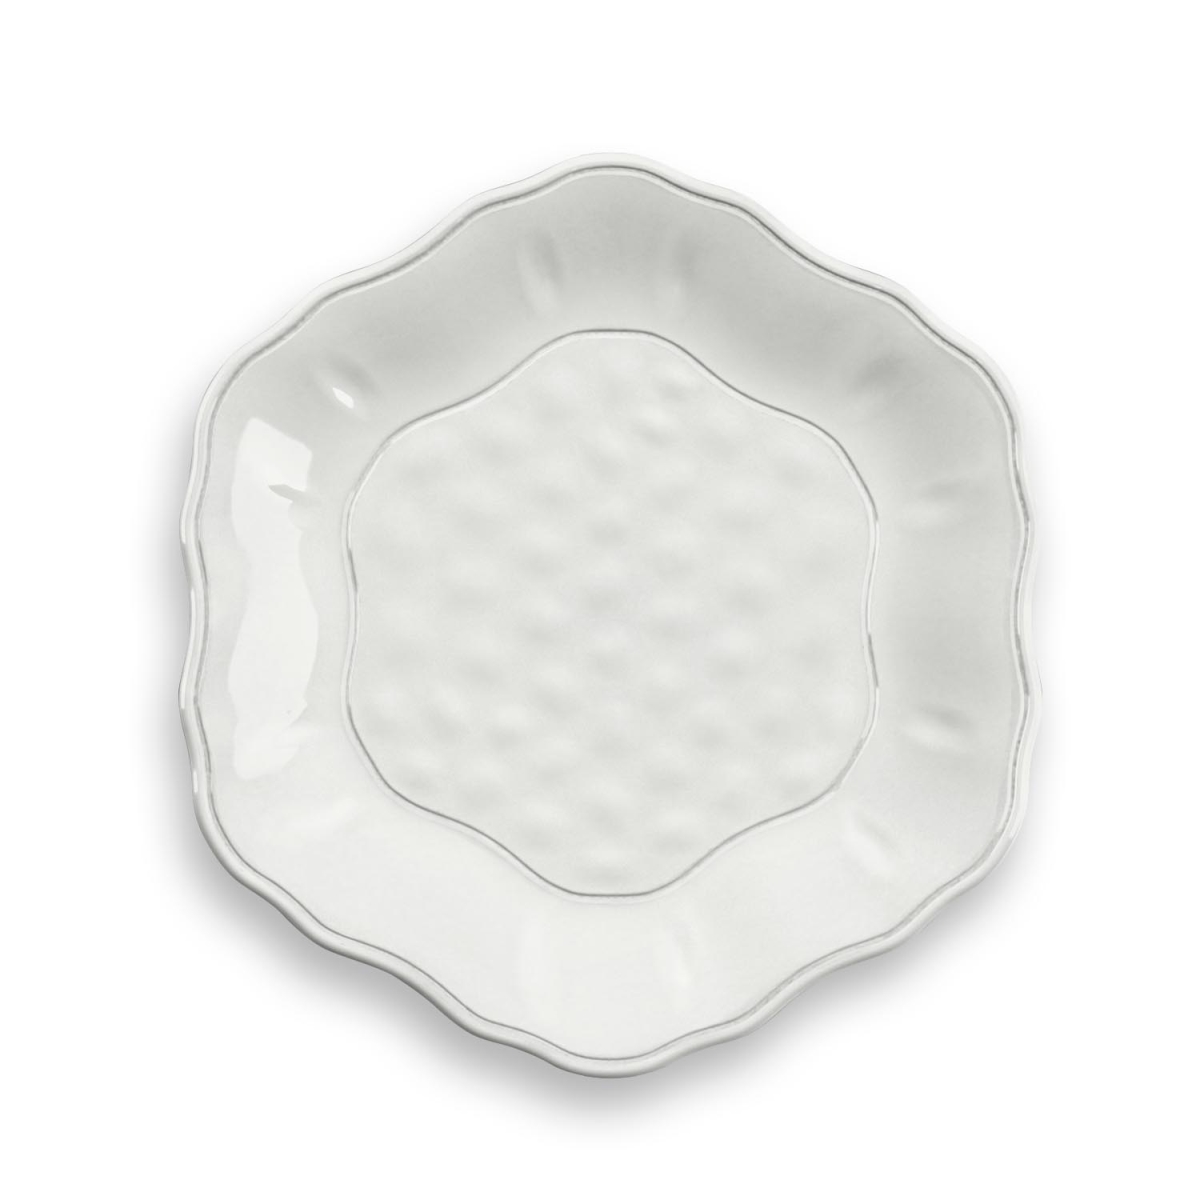 Pso8095asspw Savino Salad Plate Heavy Mold, Set Of 6 - White